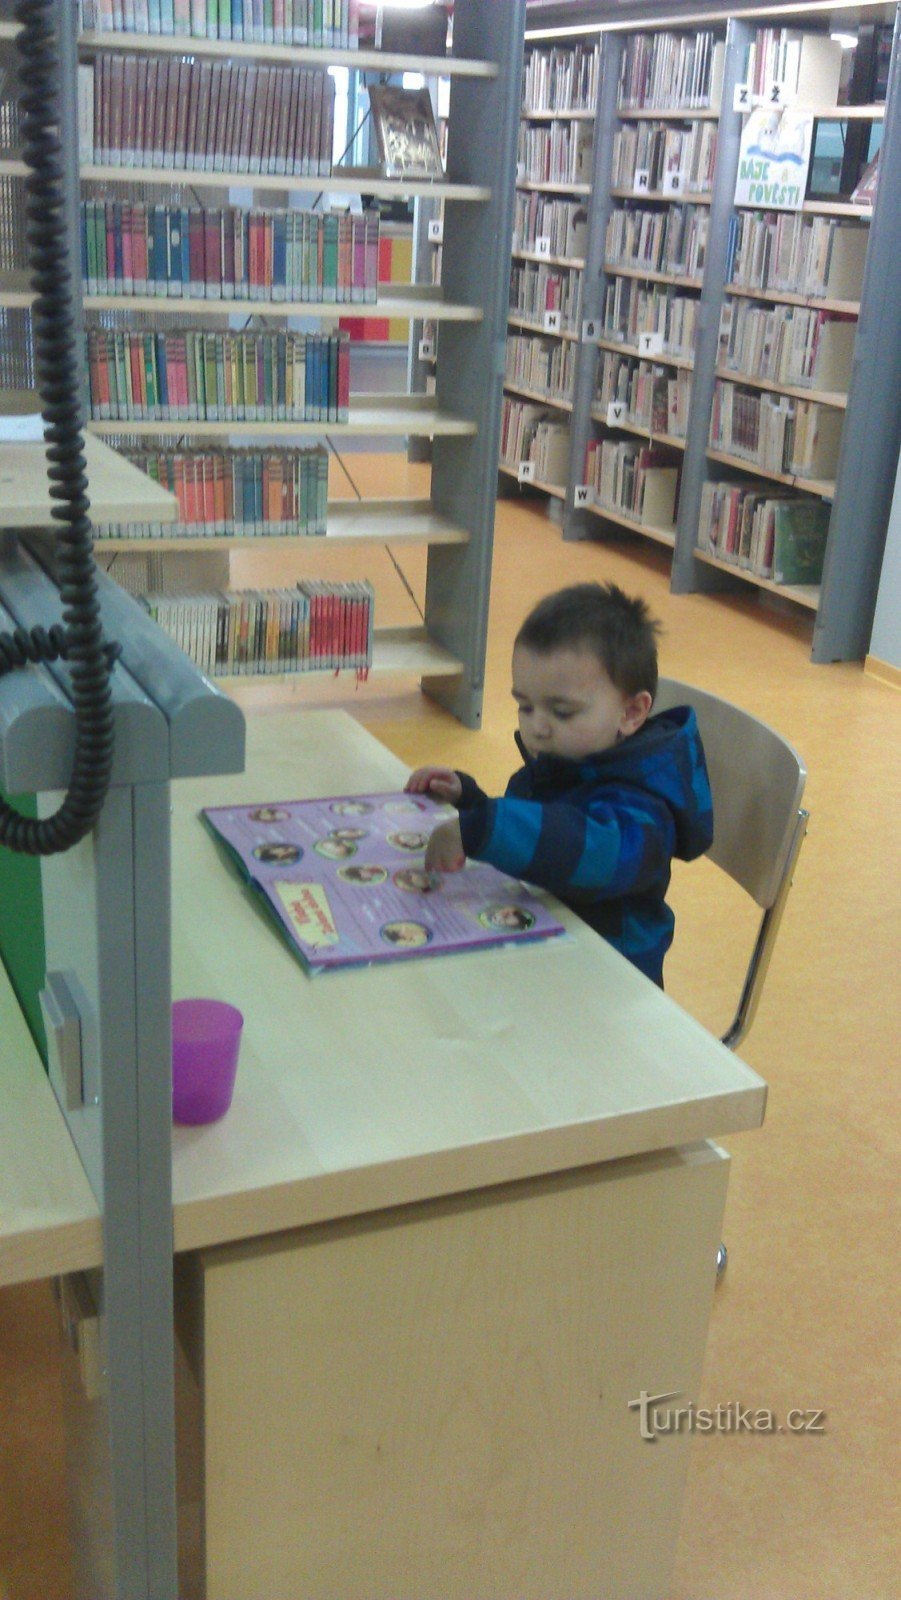 departamento infantil - biblioteca